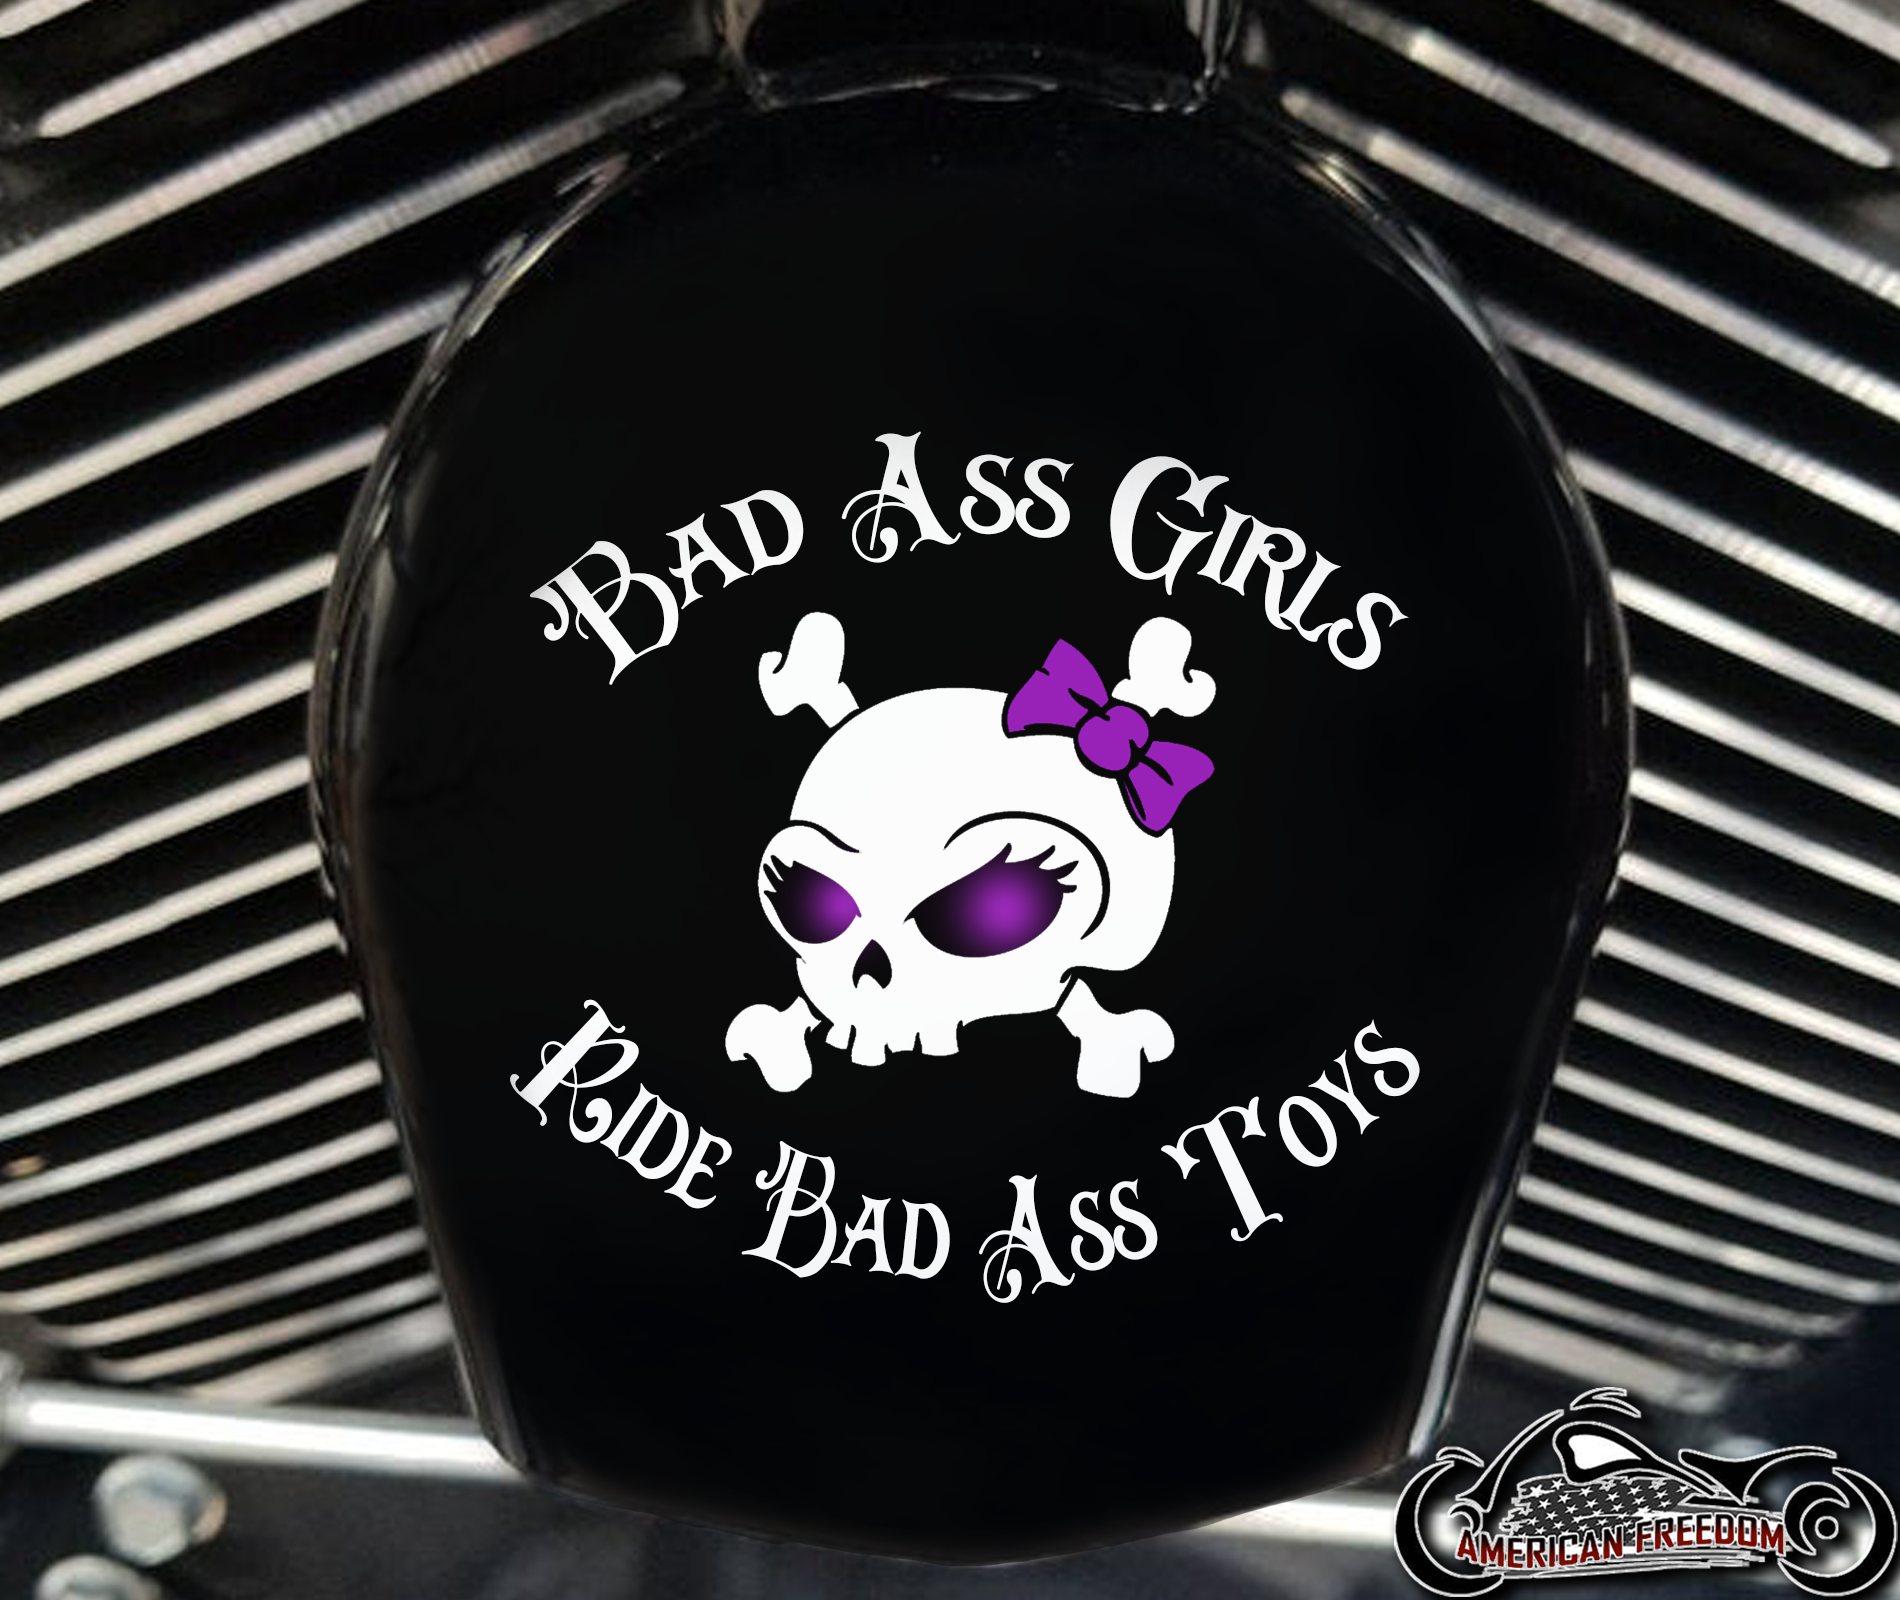 Custom Horn Cover - Bad Ass Girls Purple